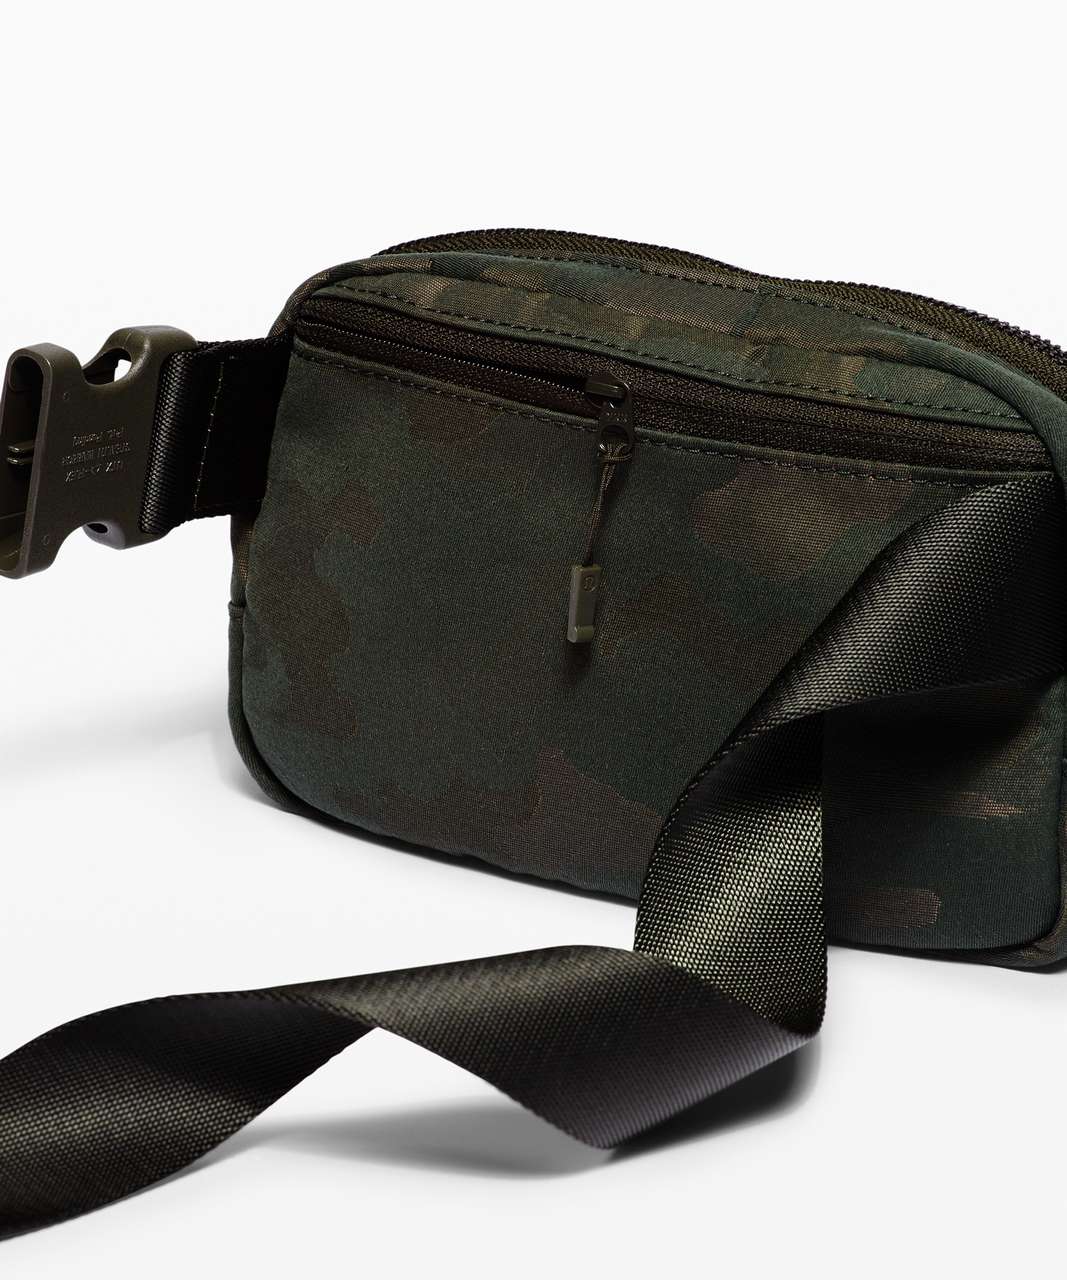 Lululemon Everywhere Belt Bag, 1L (Heritage Camo Jacquard Max Dark Olive  Sargent Green), Olive,Green, One Size : : Sports & Outdoors